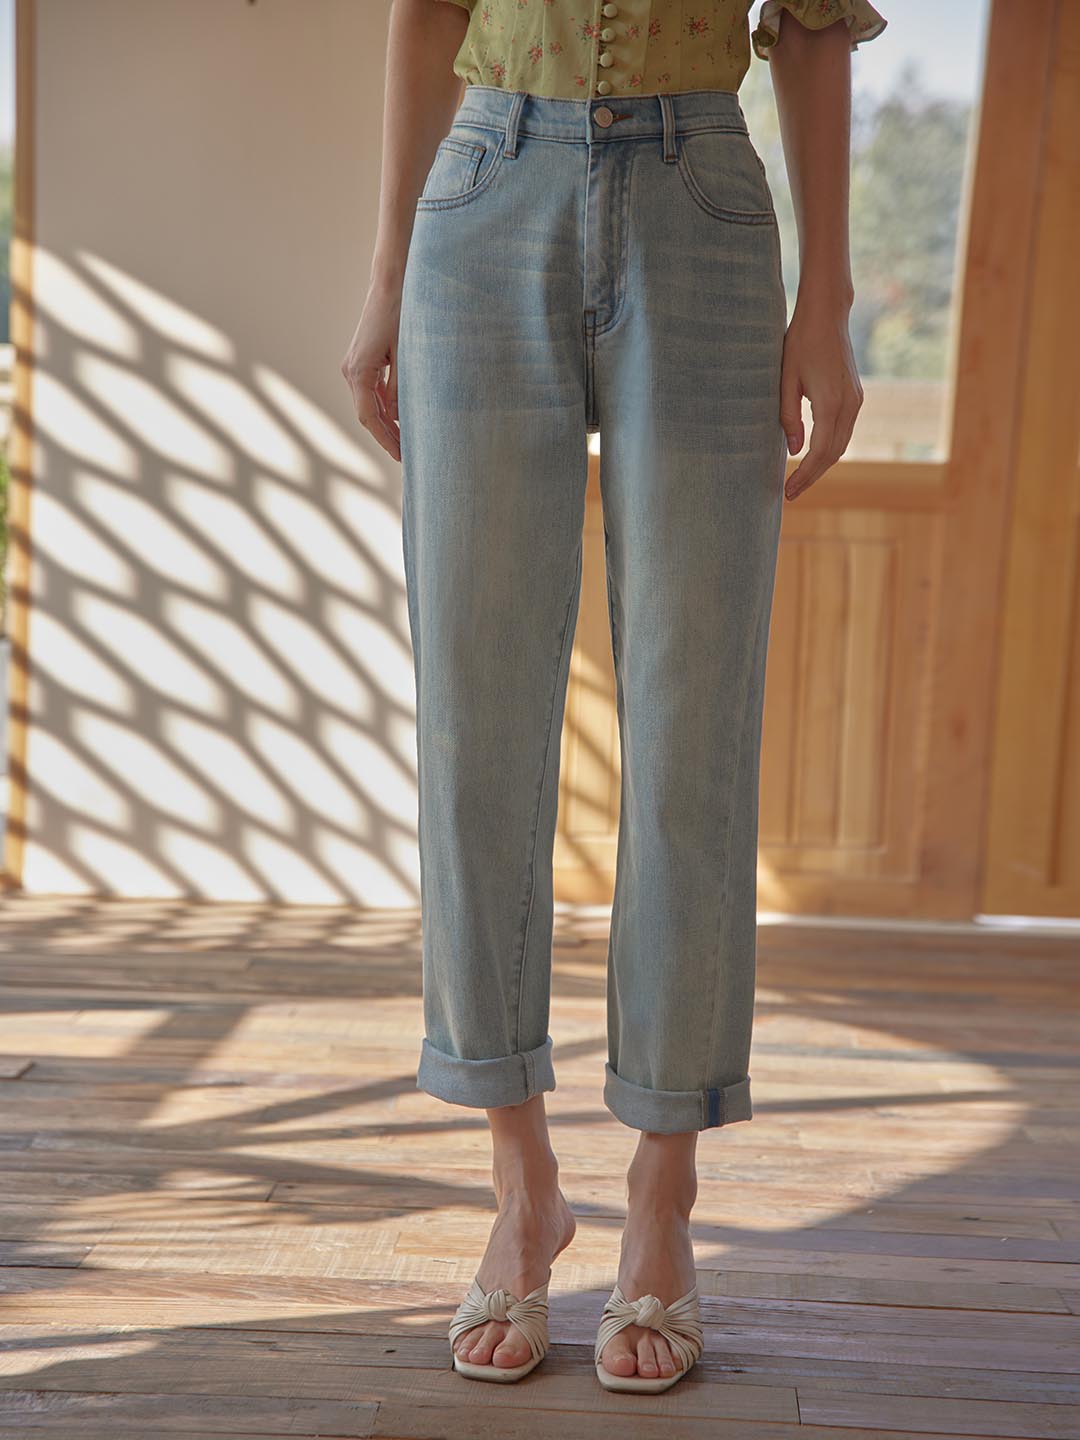 Simple Retro-Gemma 淺藍色高腰修身顯瘦牛仔褲